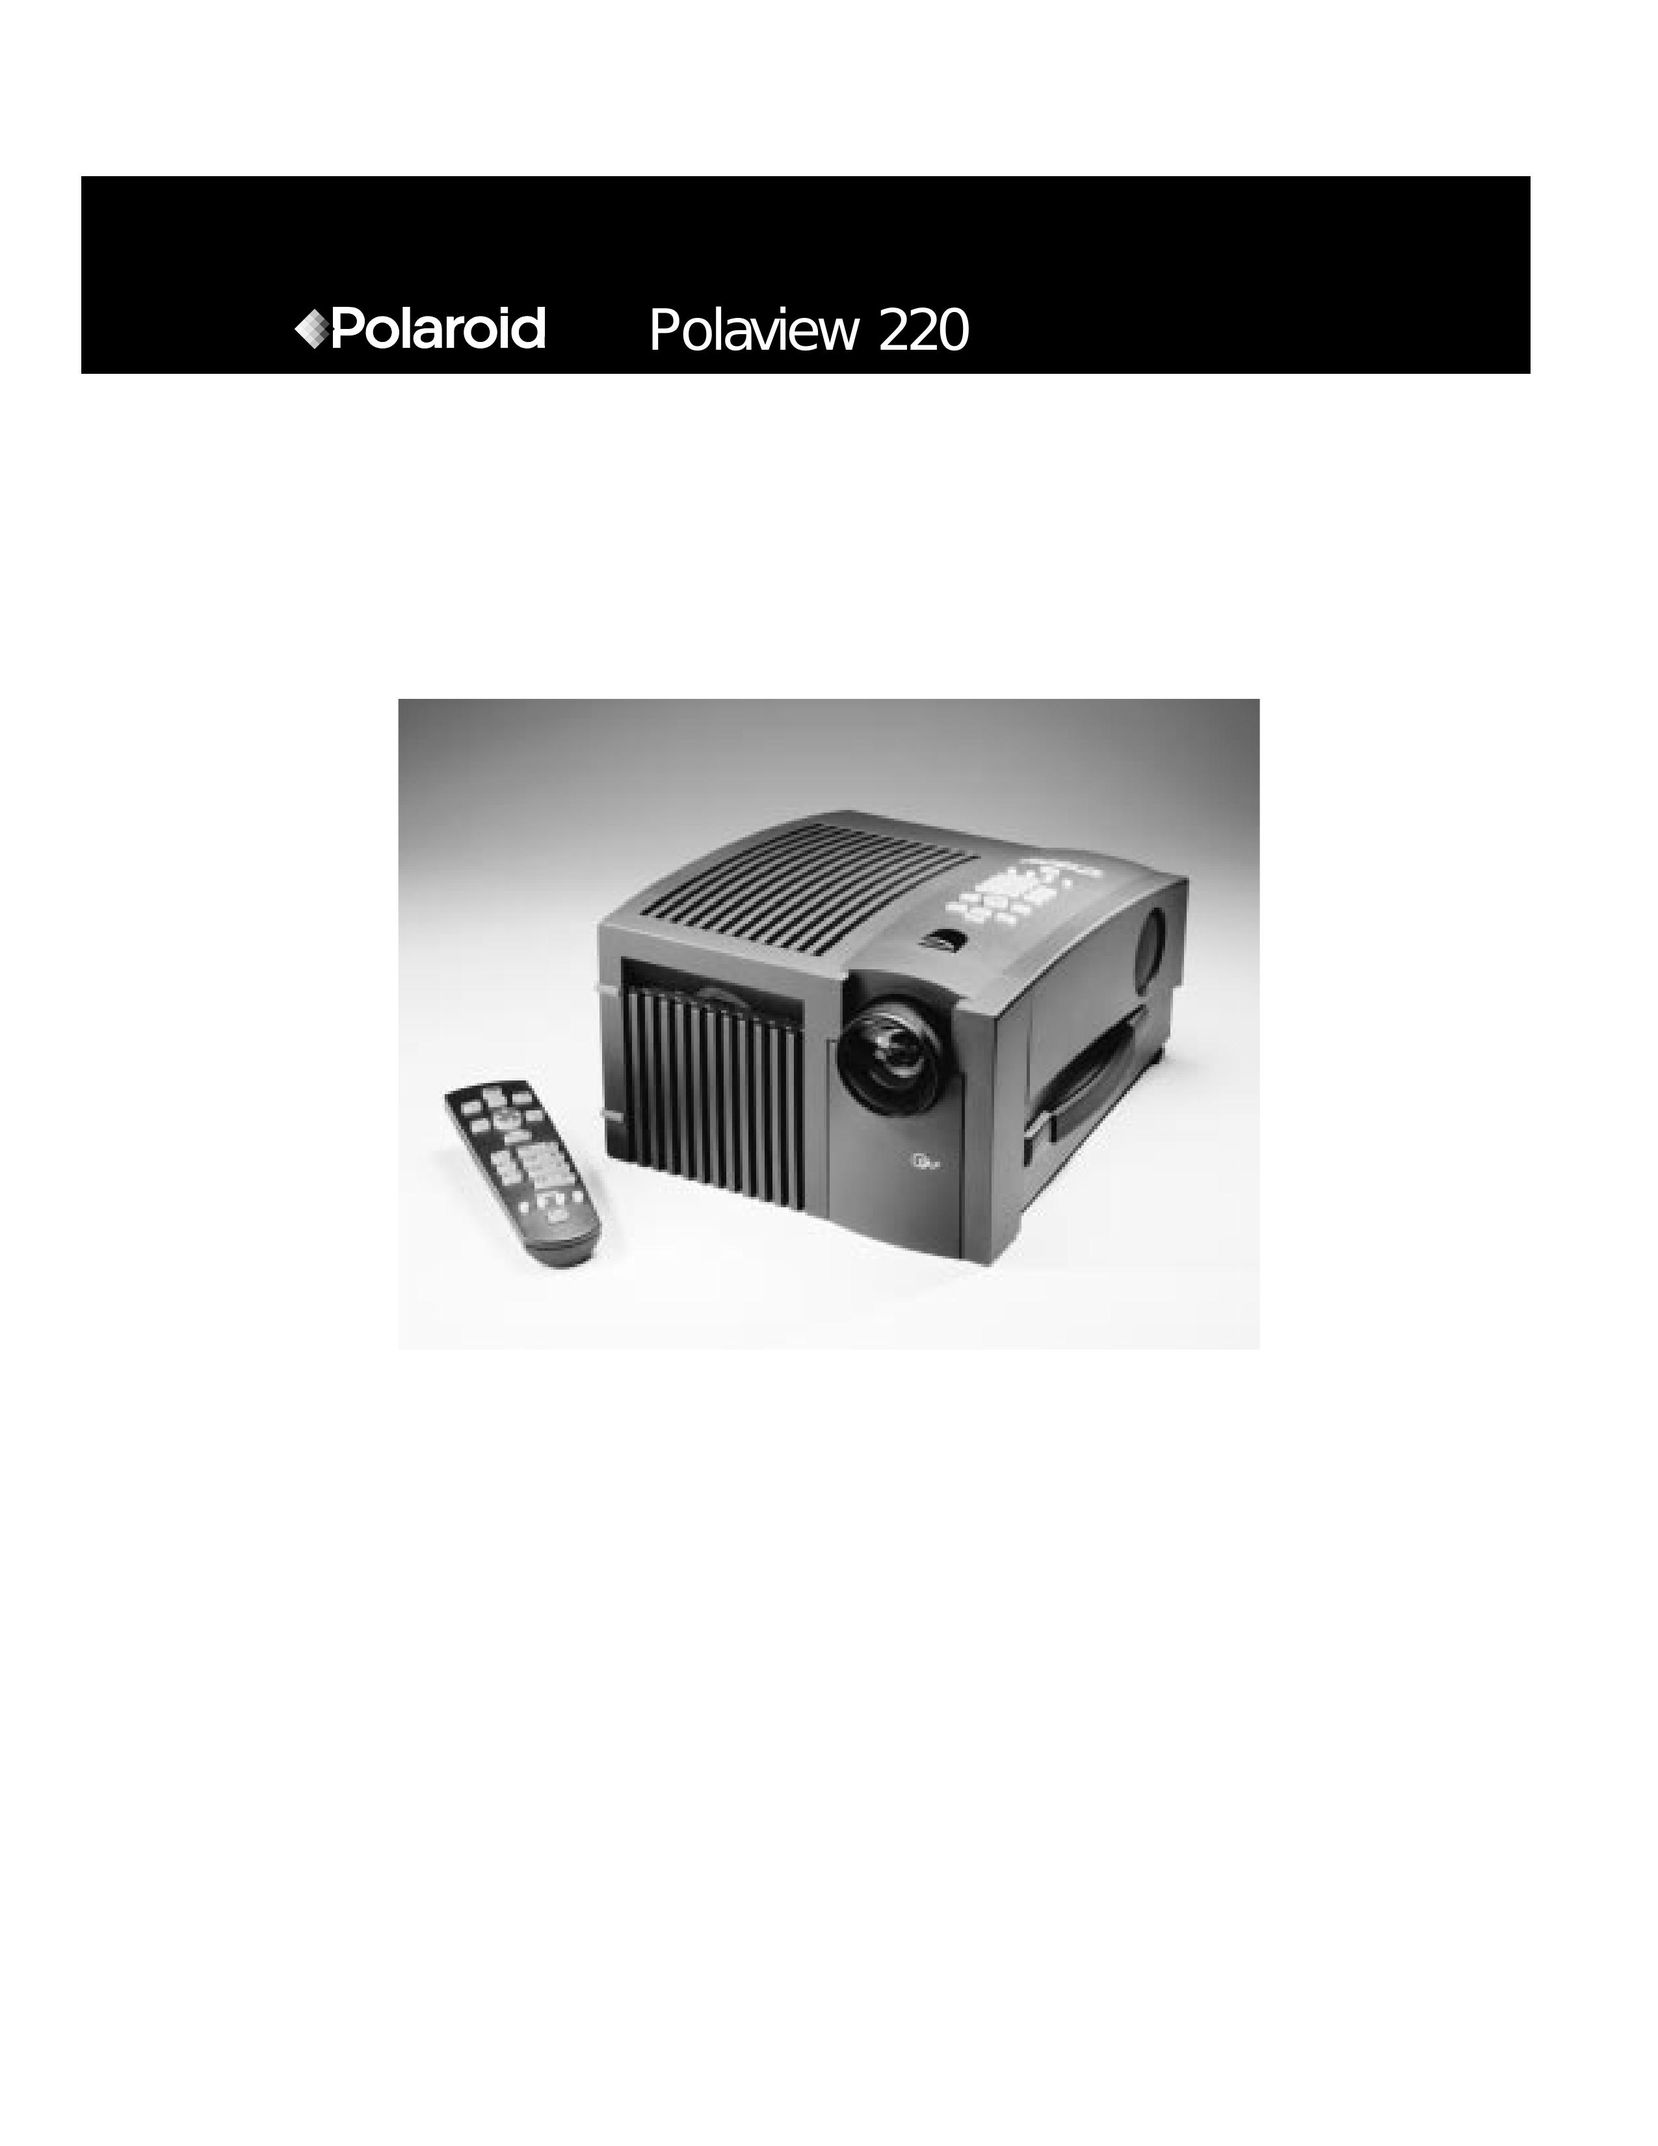 Polaroid Polaview 220 Projector User Manual